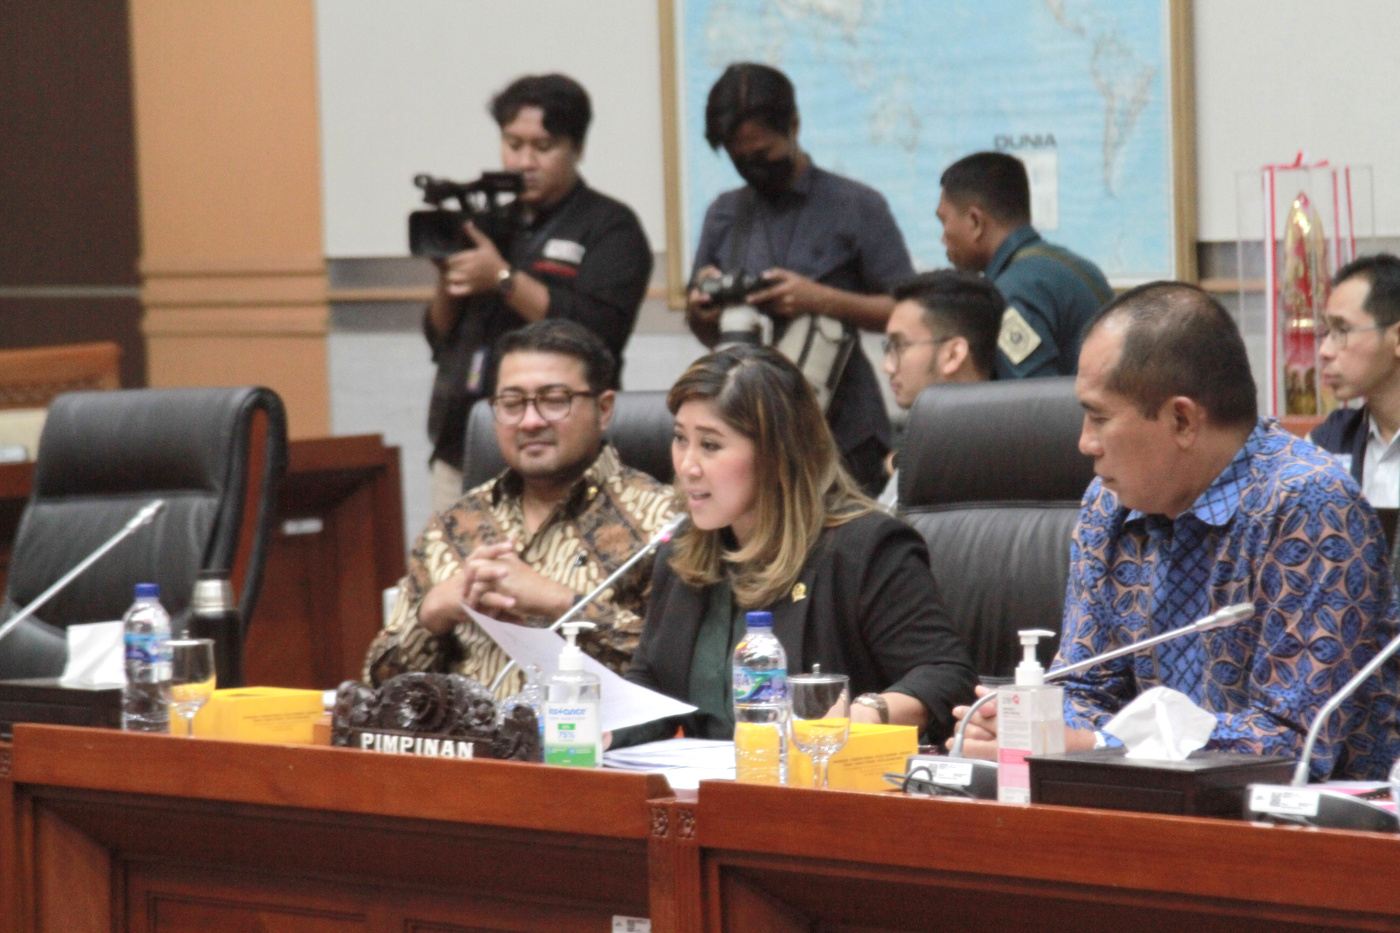 Komisi I DPR gelar raker dengan Panglima TNI, KASAL, WAKASAD, KASAU bahas situasi terkini keamanan Papua (Ashar/SinPo.id)